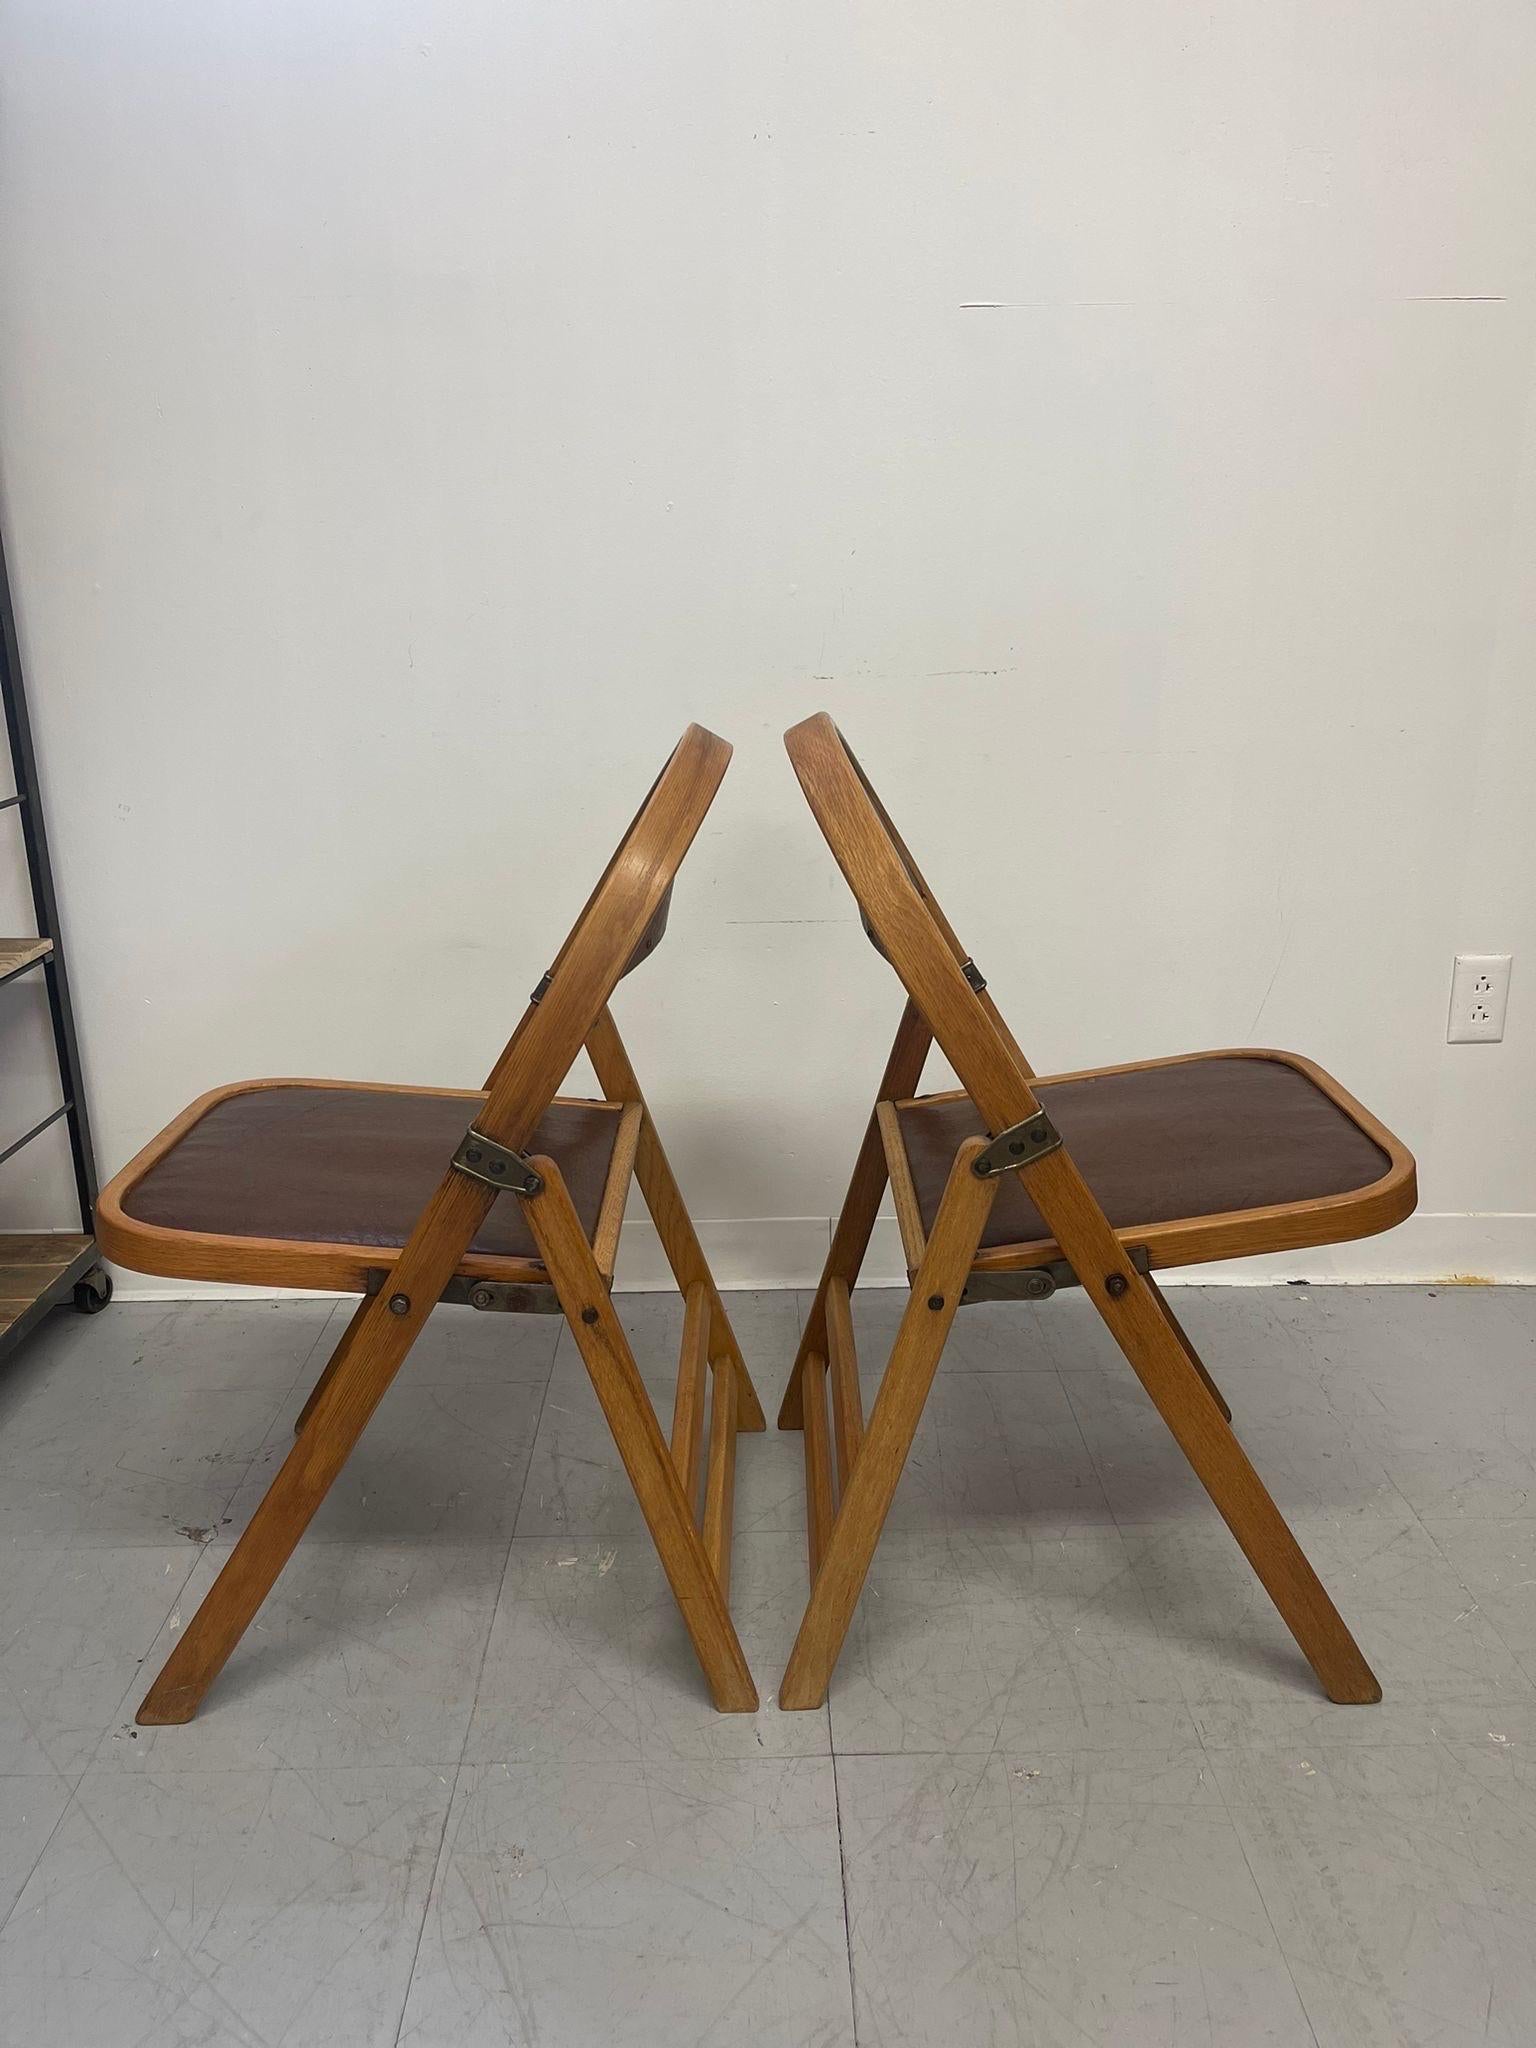 clarin chairs